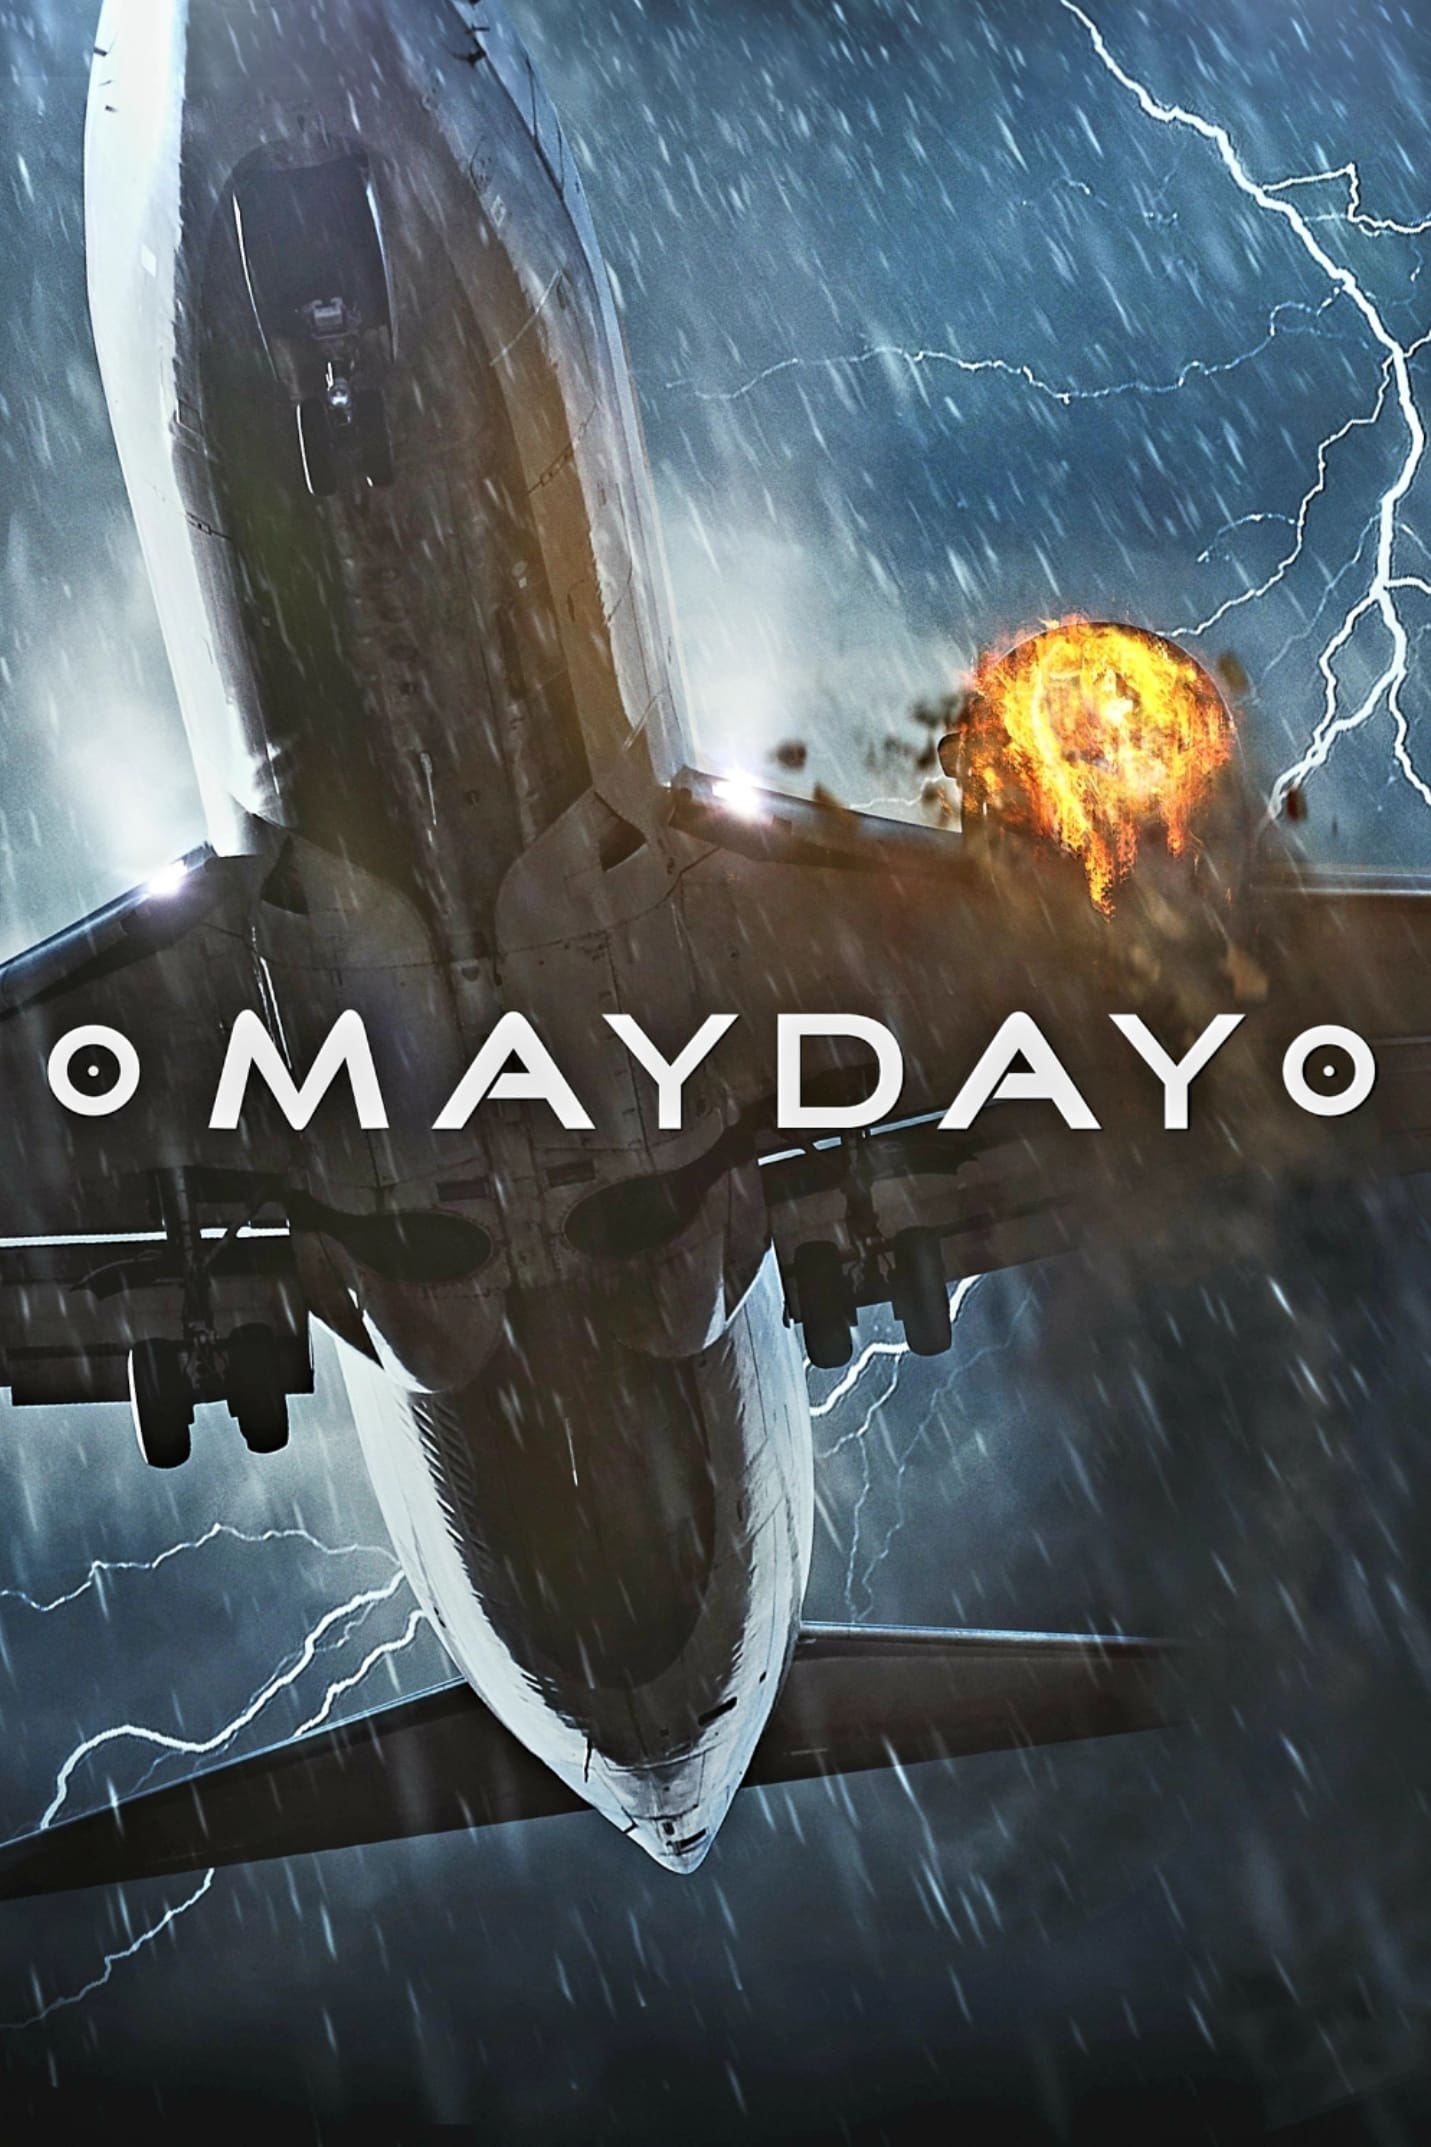 Mayday – Alarm im Cockpit